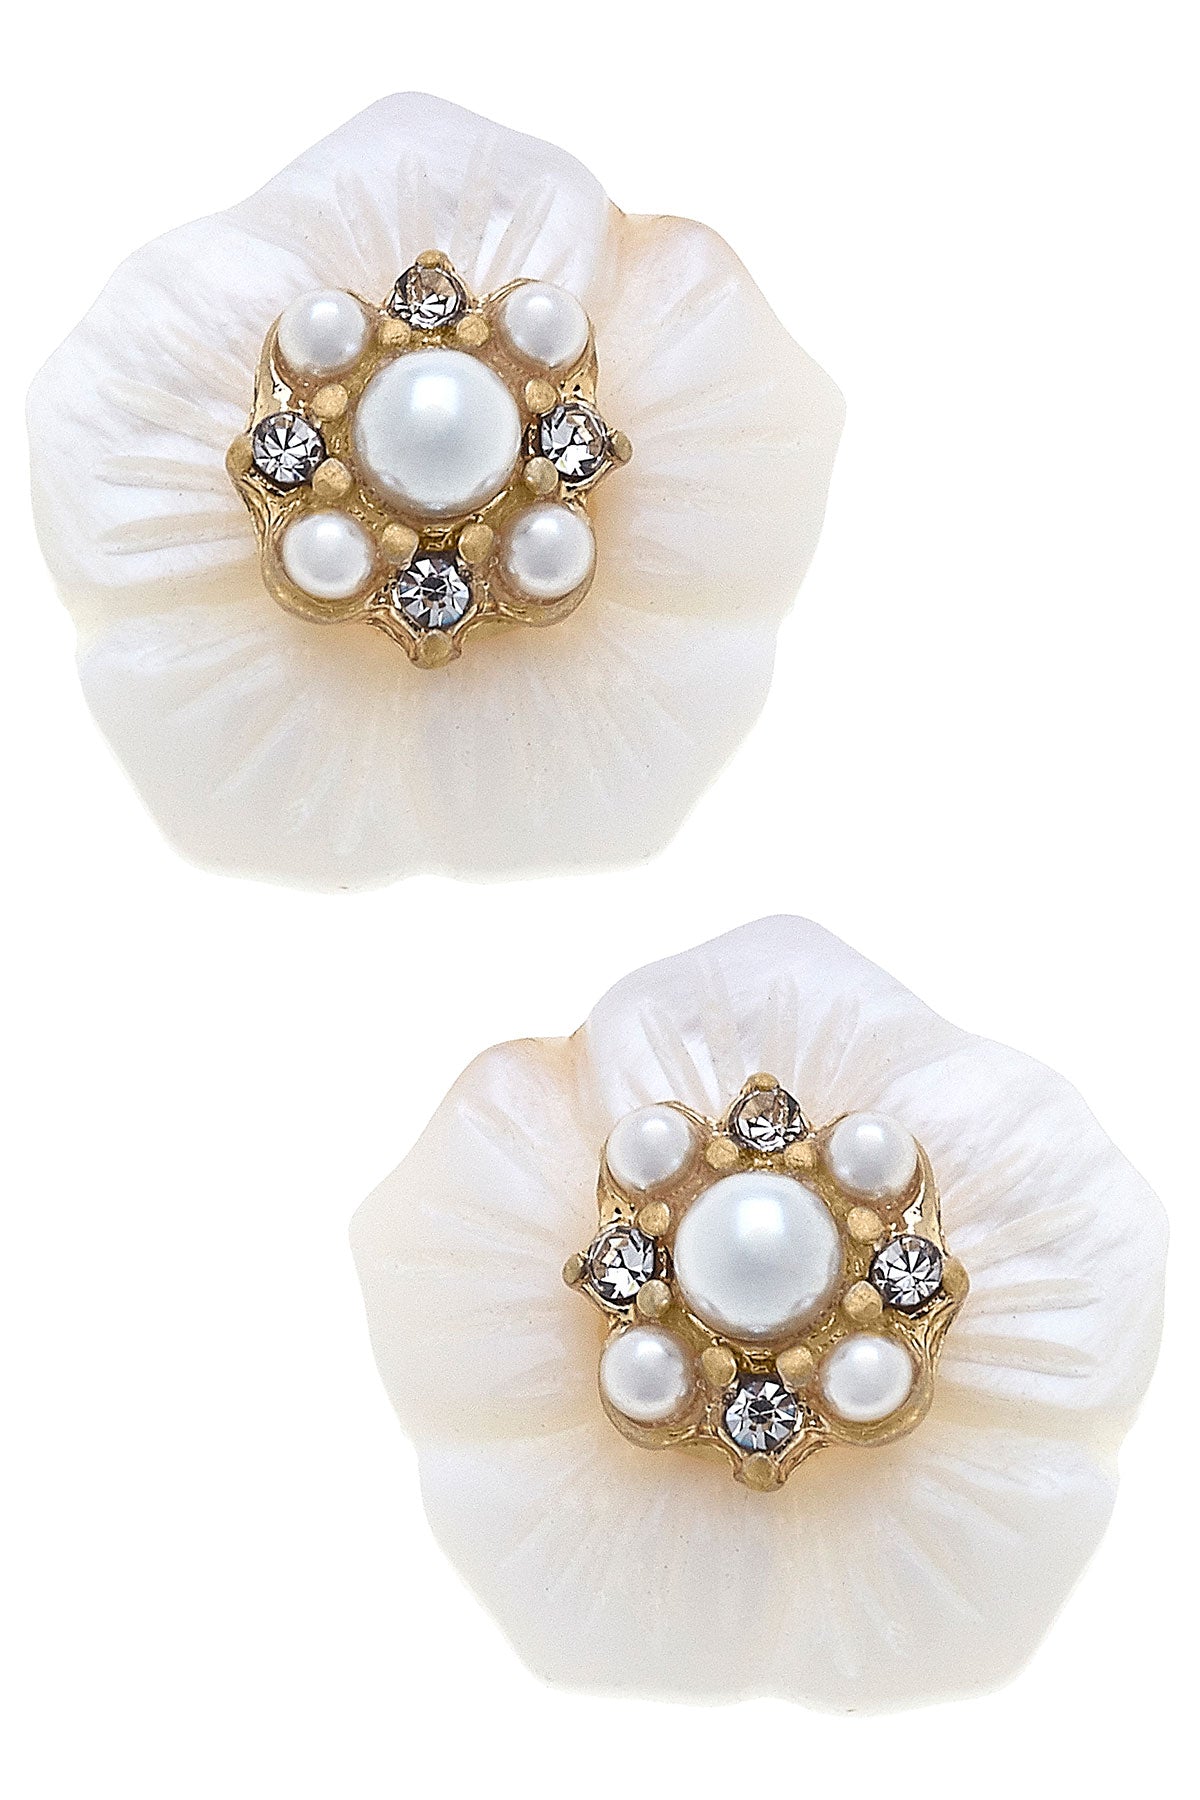 Cassidy Pearl & Rhinestone Flower Stud Earrings in Ivory